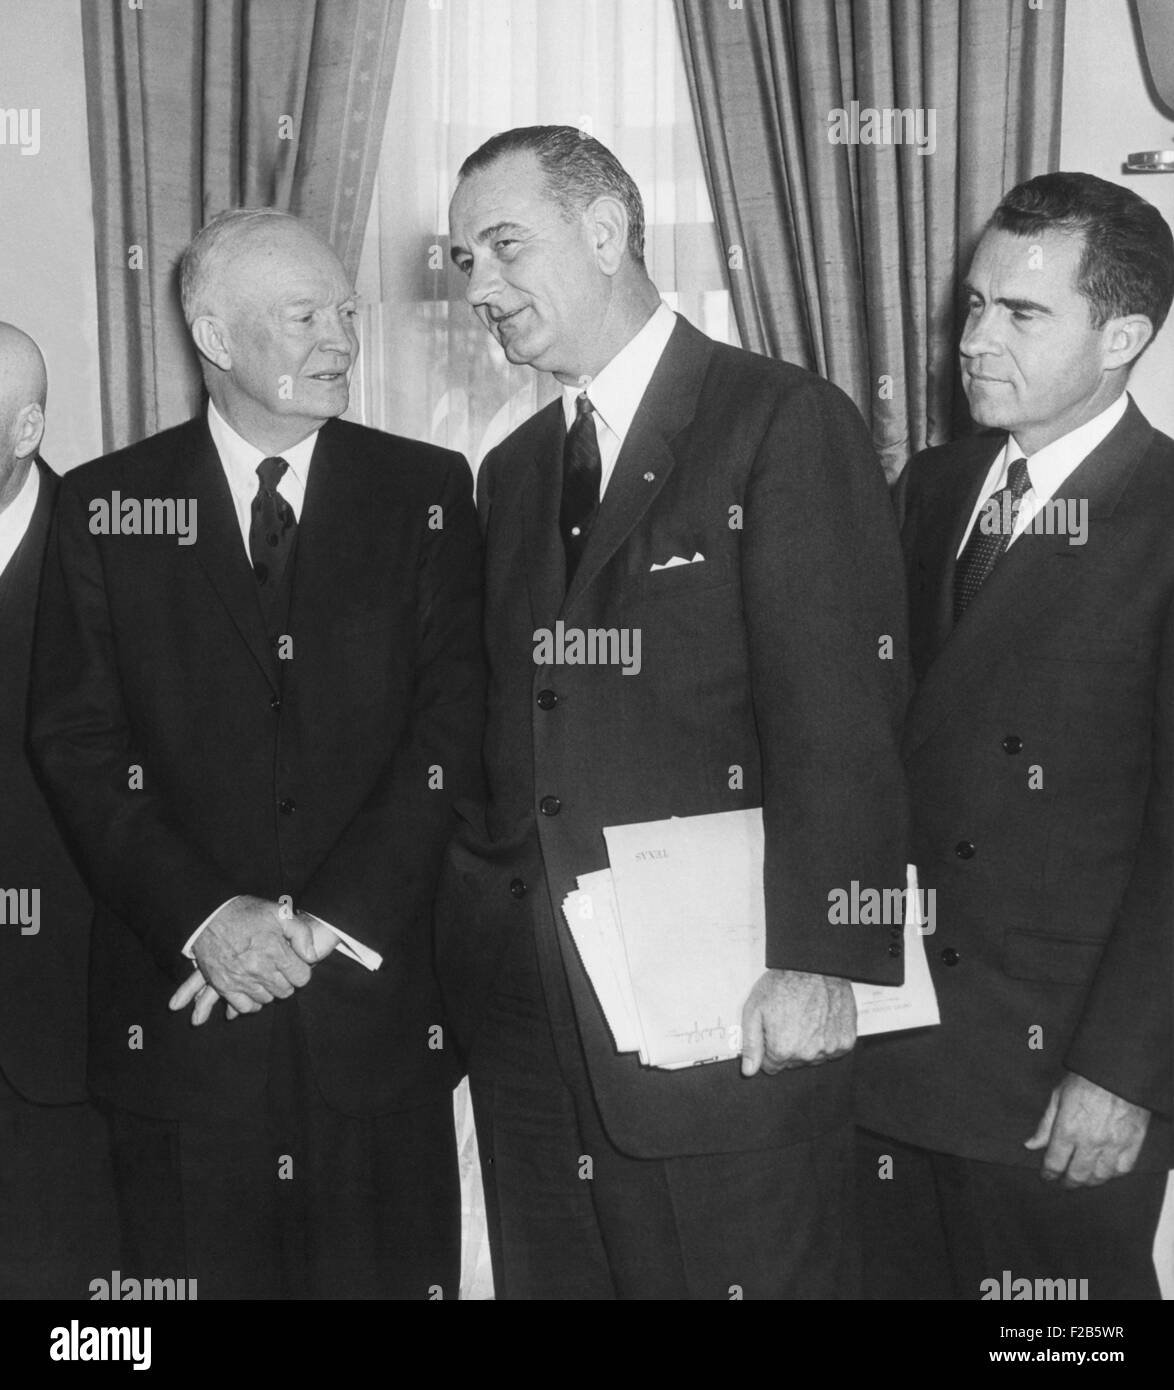 President Eisenhower and future Presidents Lyndon Johnson and Richard Nixon. White House Oval Office,  March 6, 1959. Johnson was Senate Majority Leader and Nixon served as Eisenhower's Vice President. - (BSLOC 2014 16 251) Stock Photo